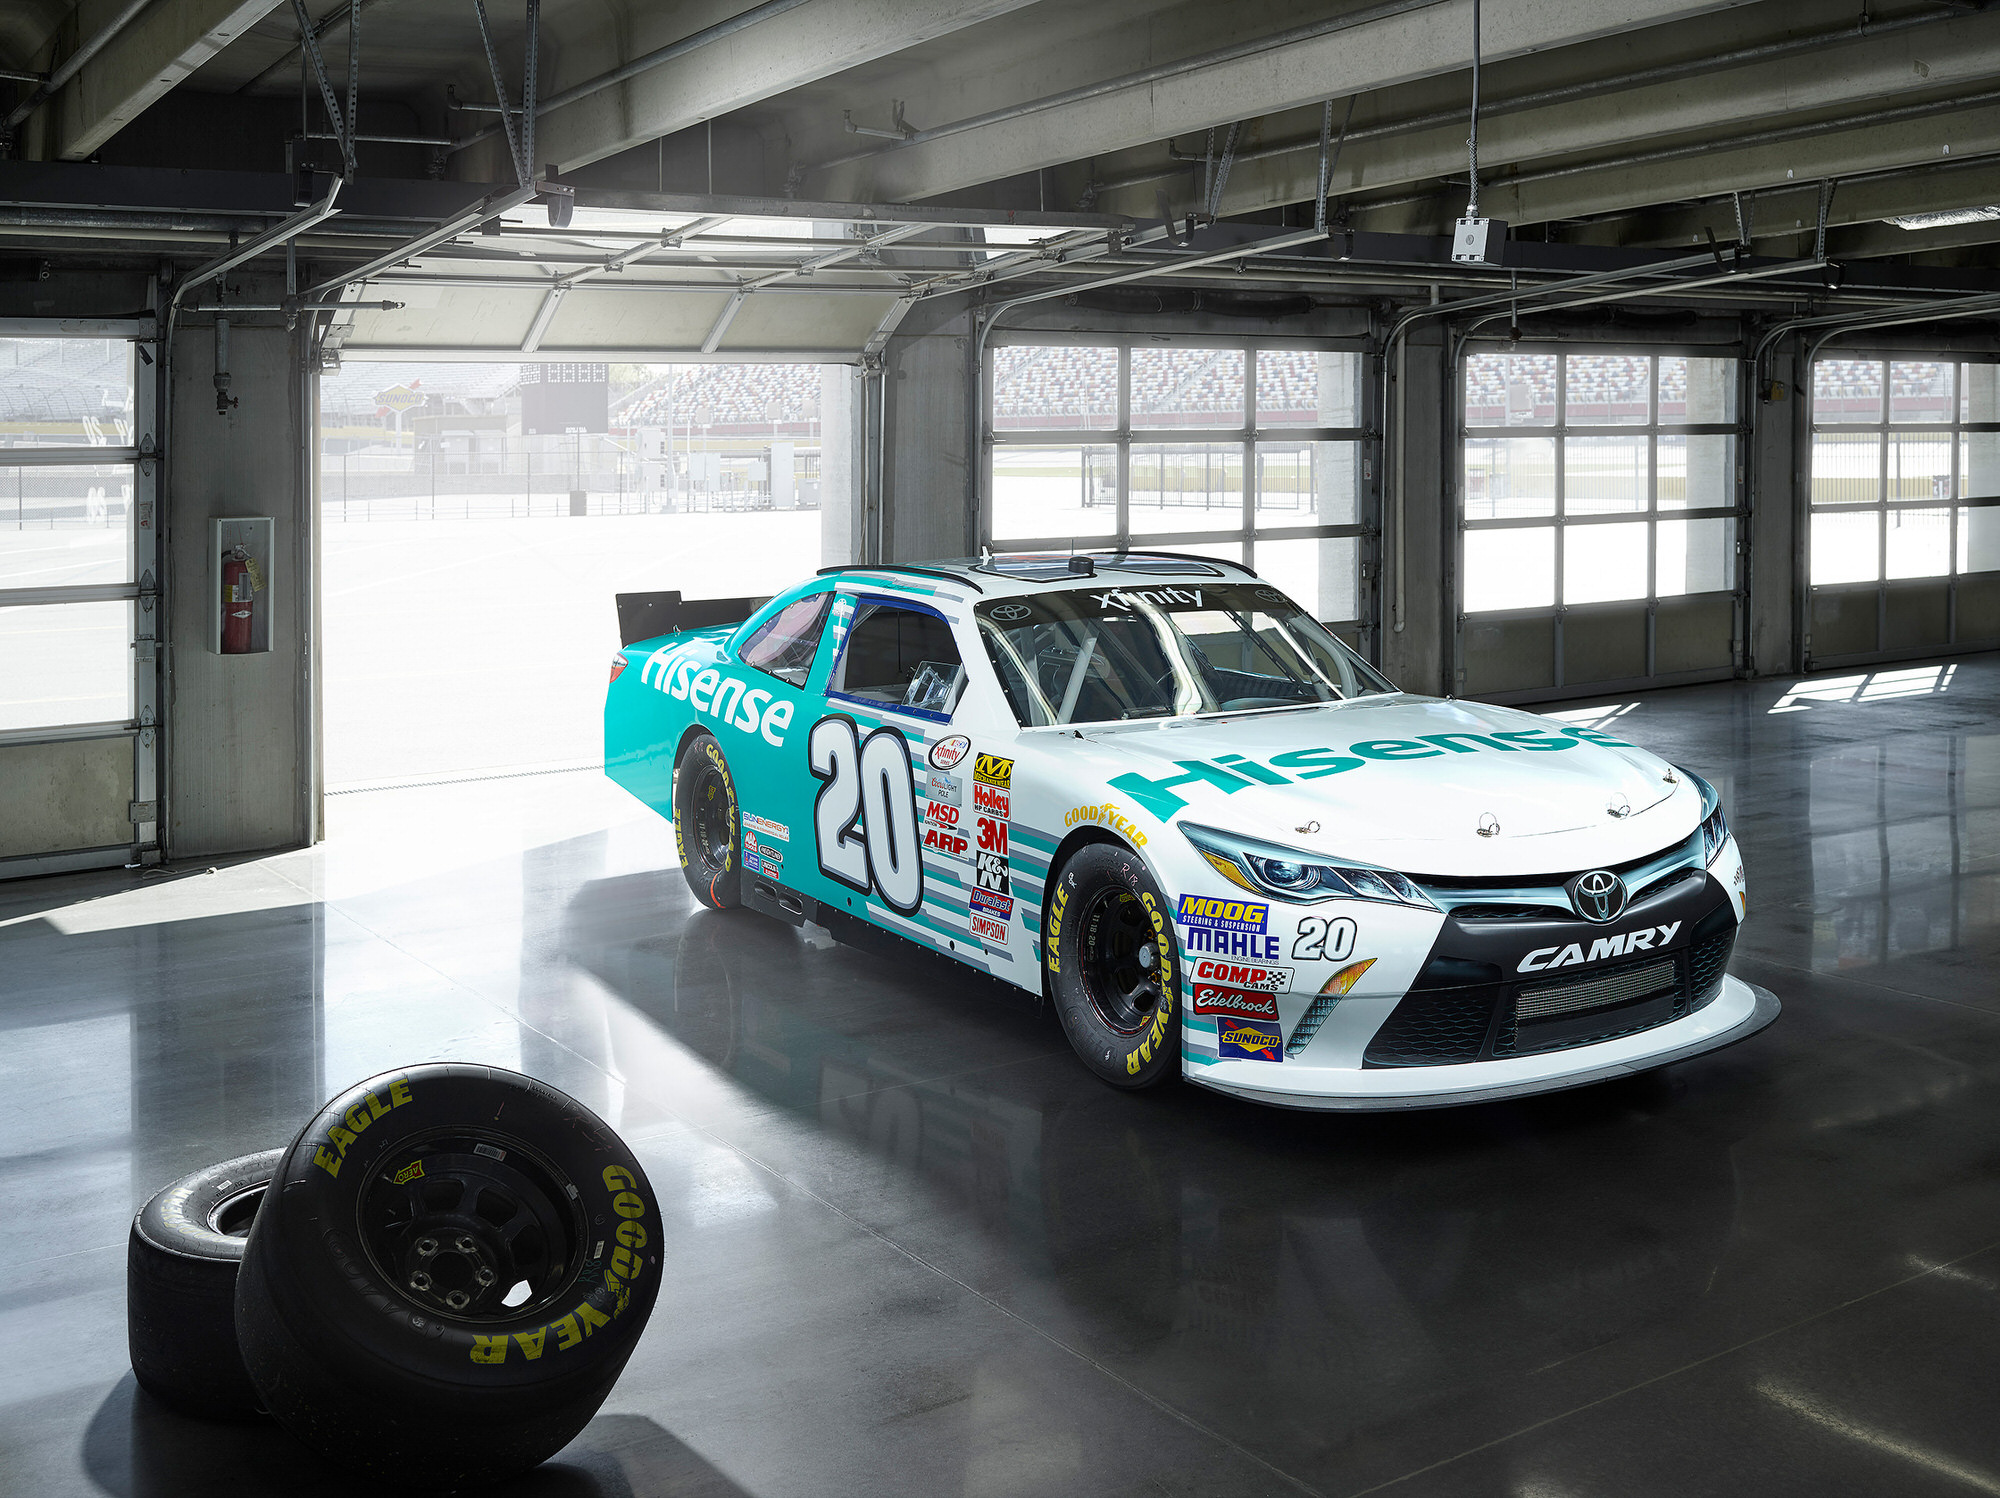 Hisense NASCAR driven by Denny Hamlin and Eric Jones waits in the garage